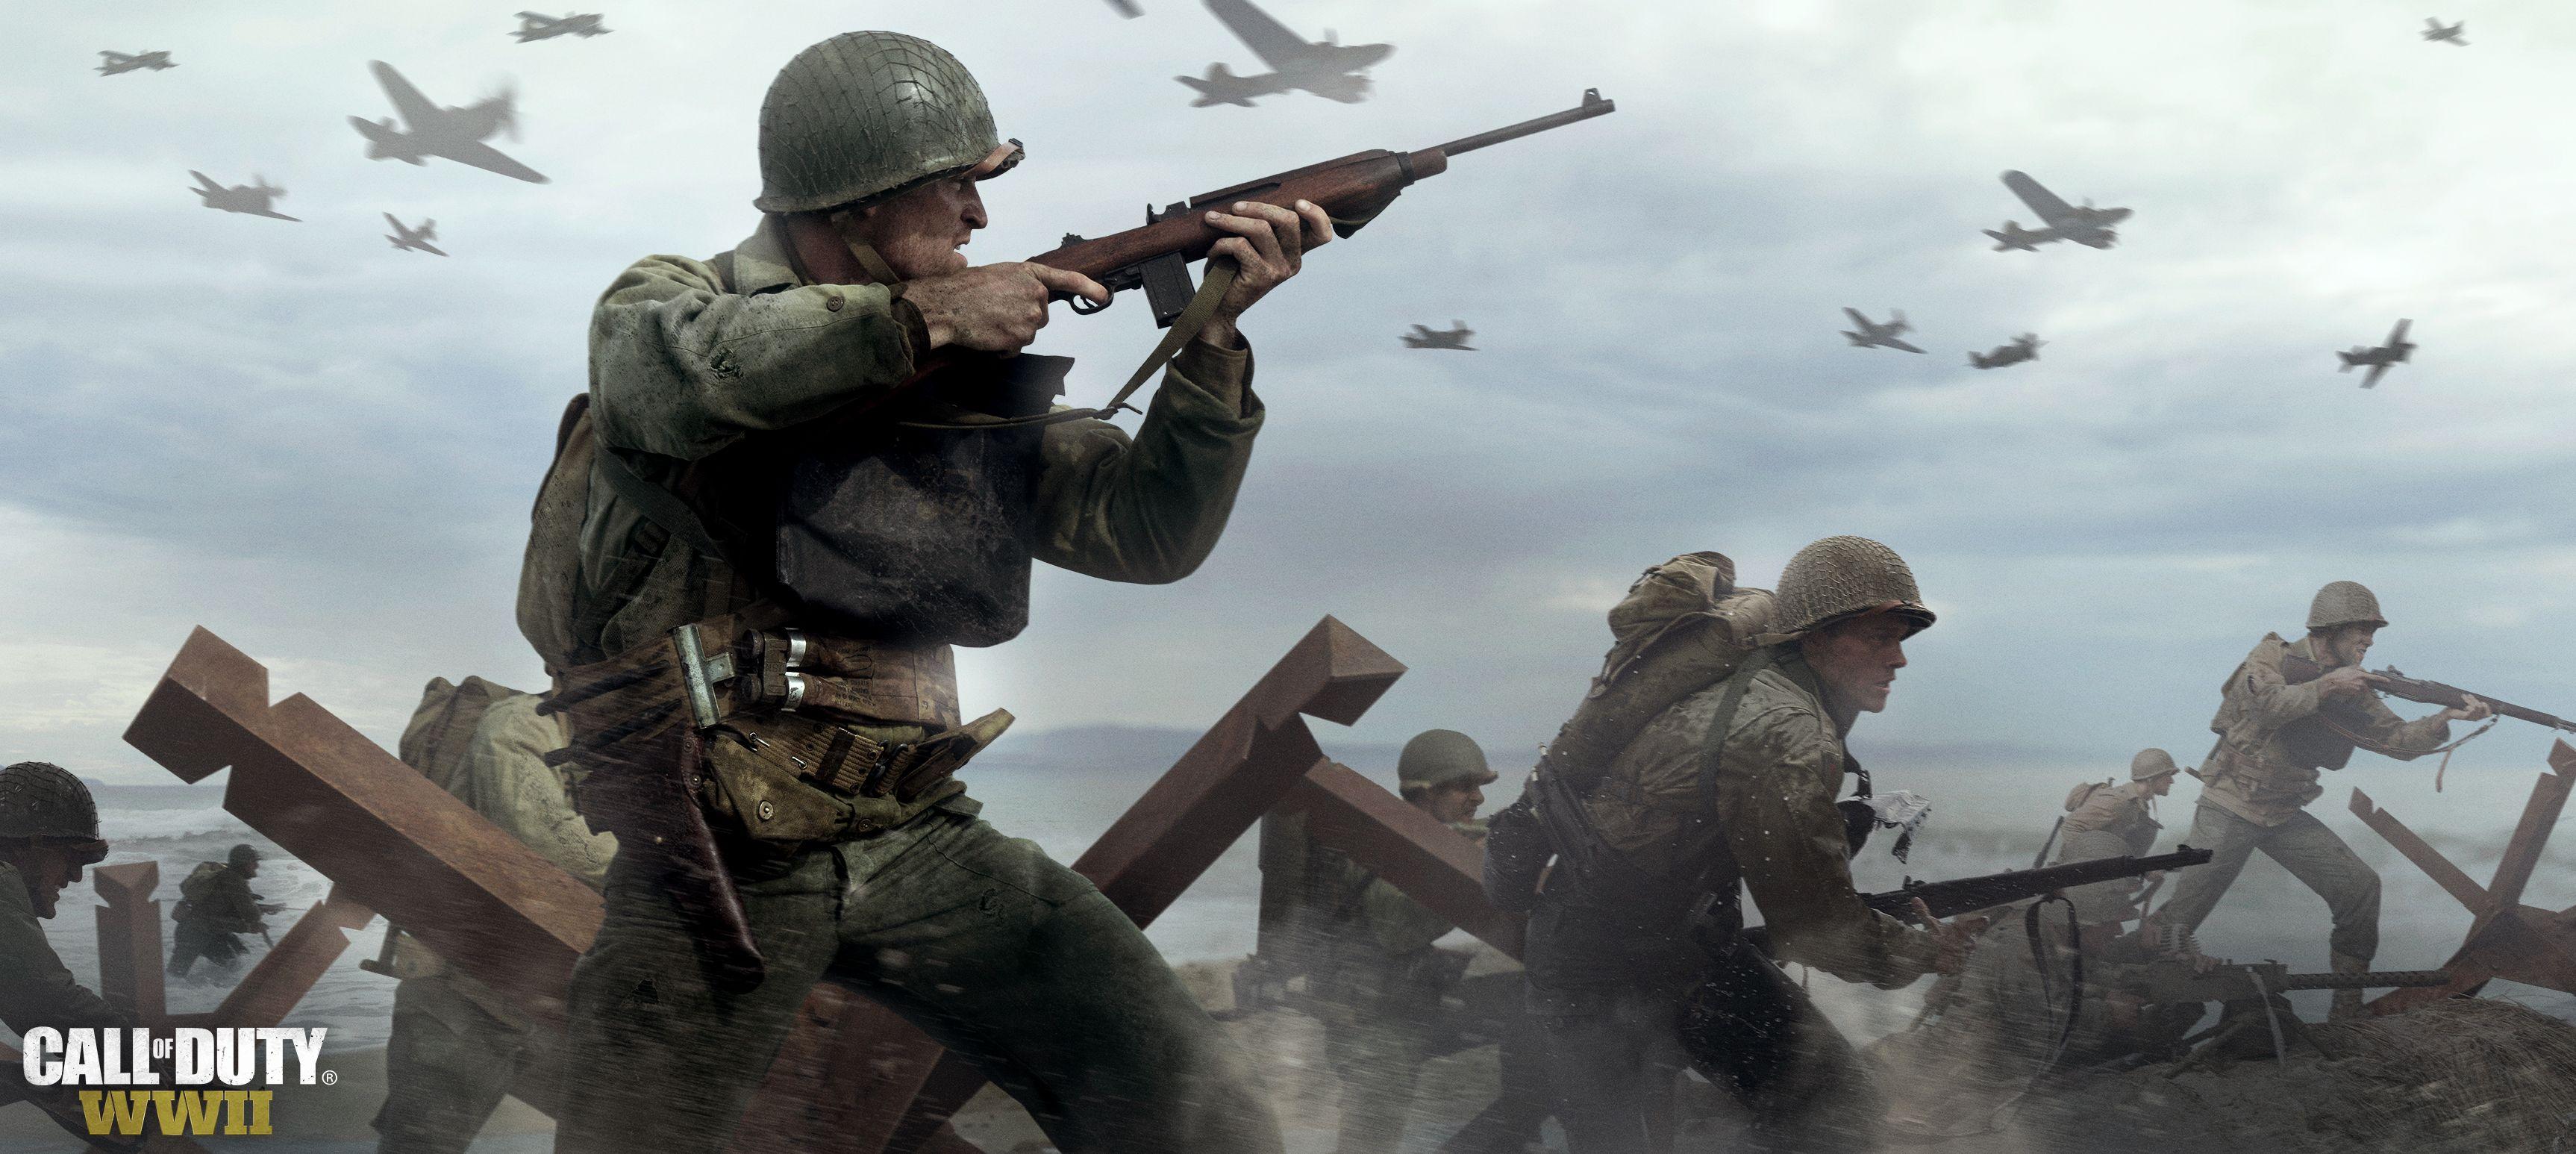 Call of Duty: WWII Full HD Wallpaper